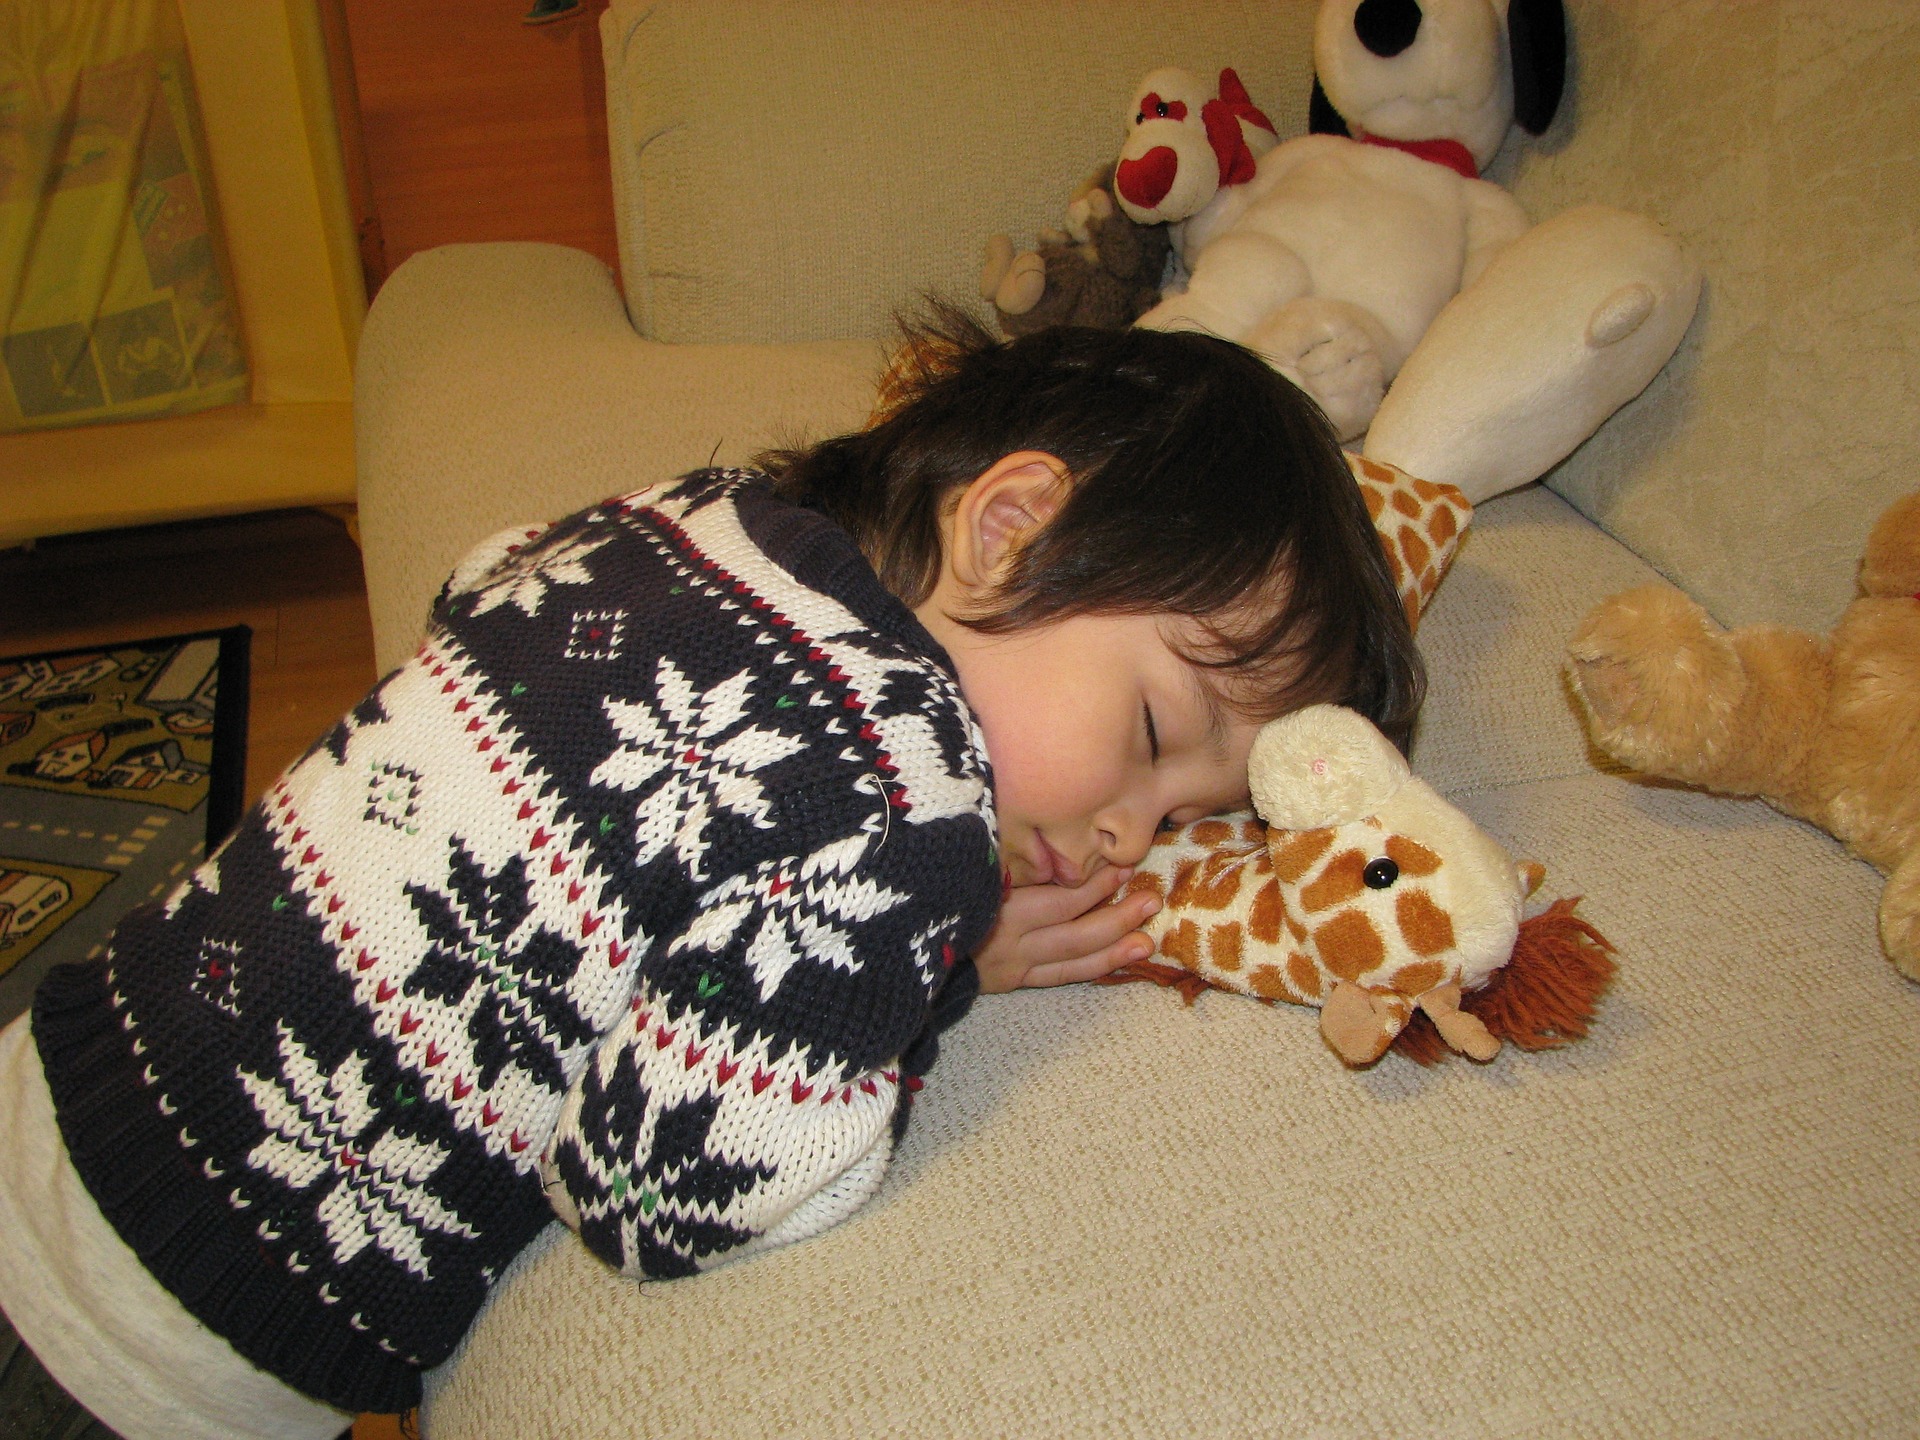 Child asleep on the sofa hugging a soft toy giraffe